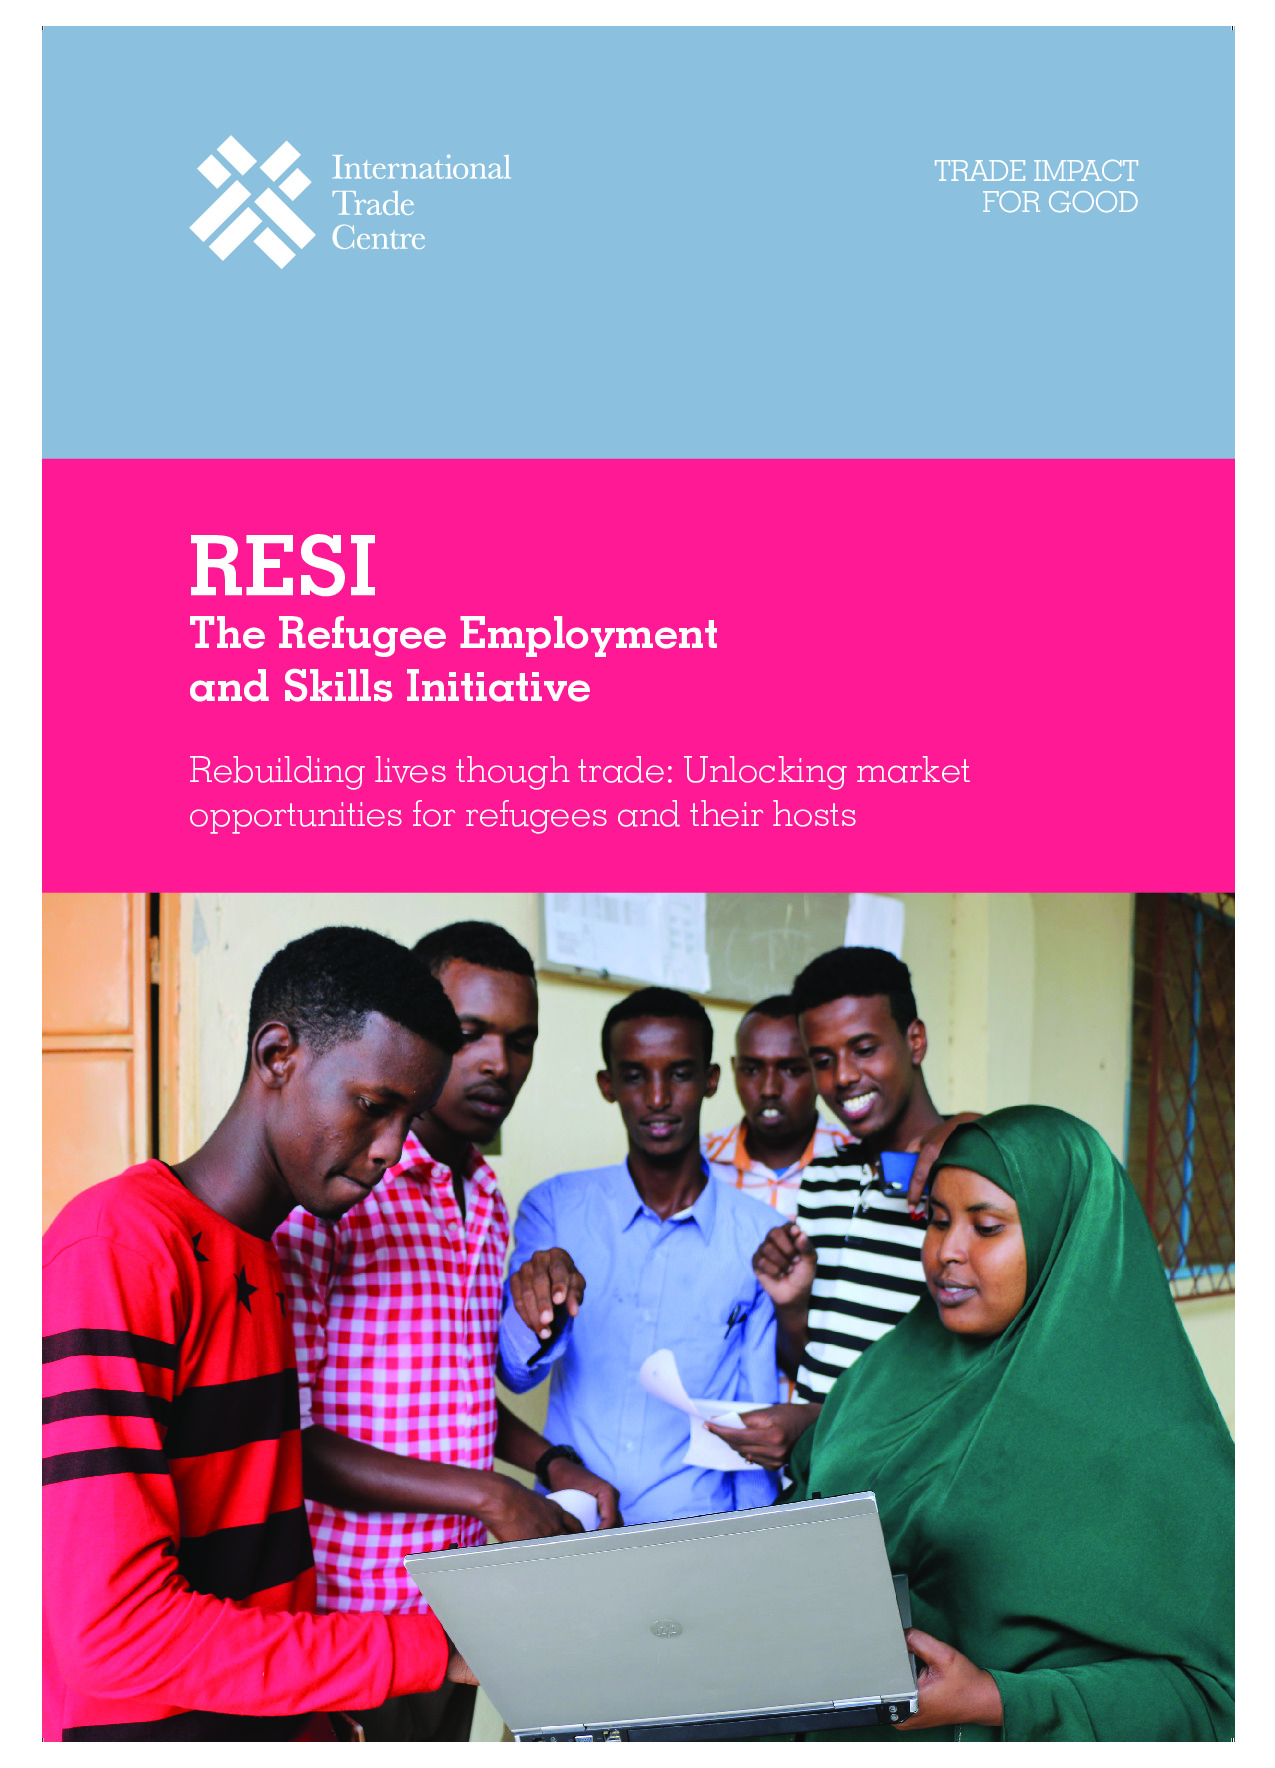 itc_refugee_employment_skills_initiative